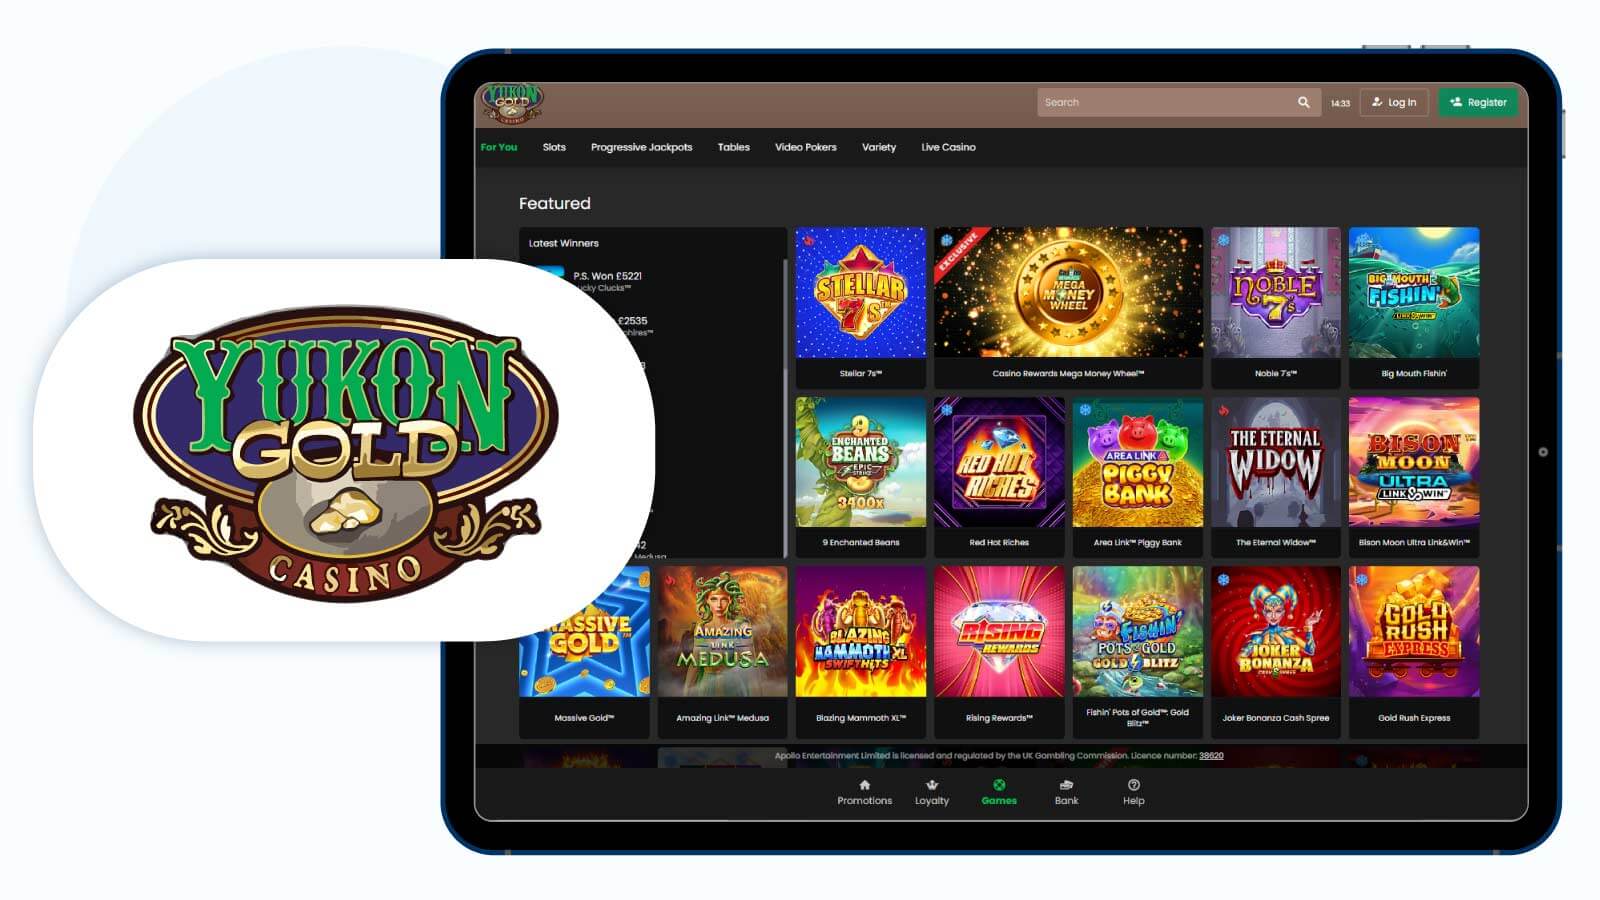 Yukon Gold Casino – Best Casino Rewards Loyalty Program